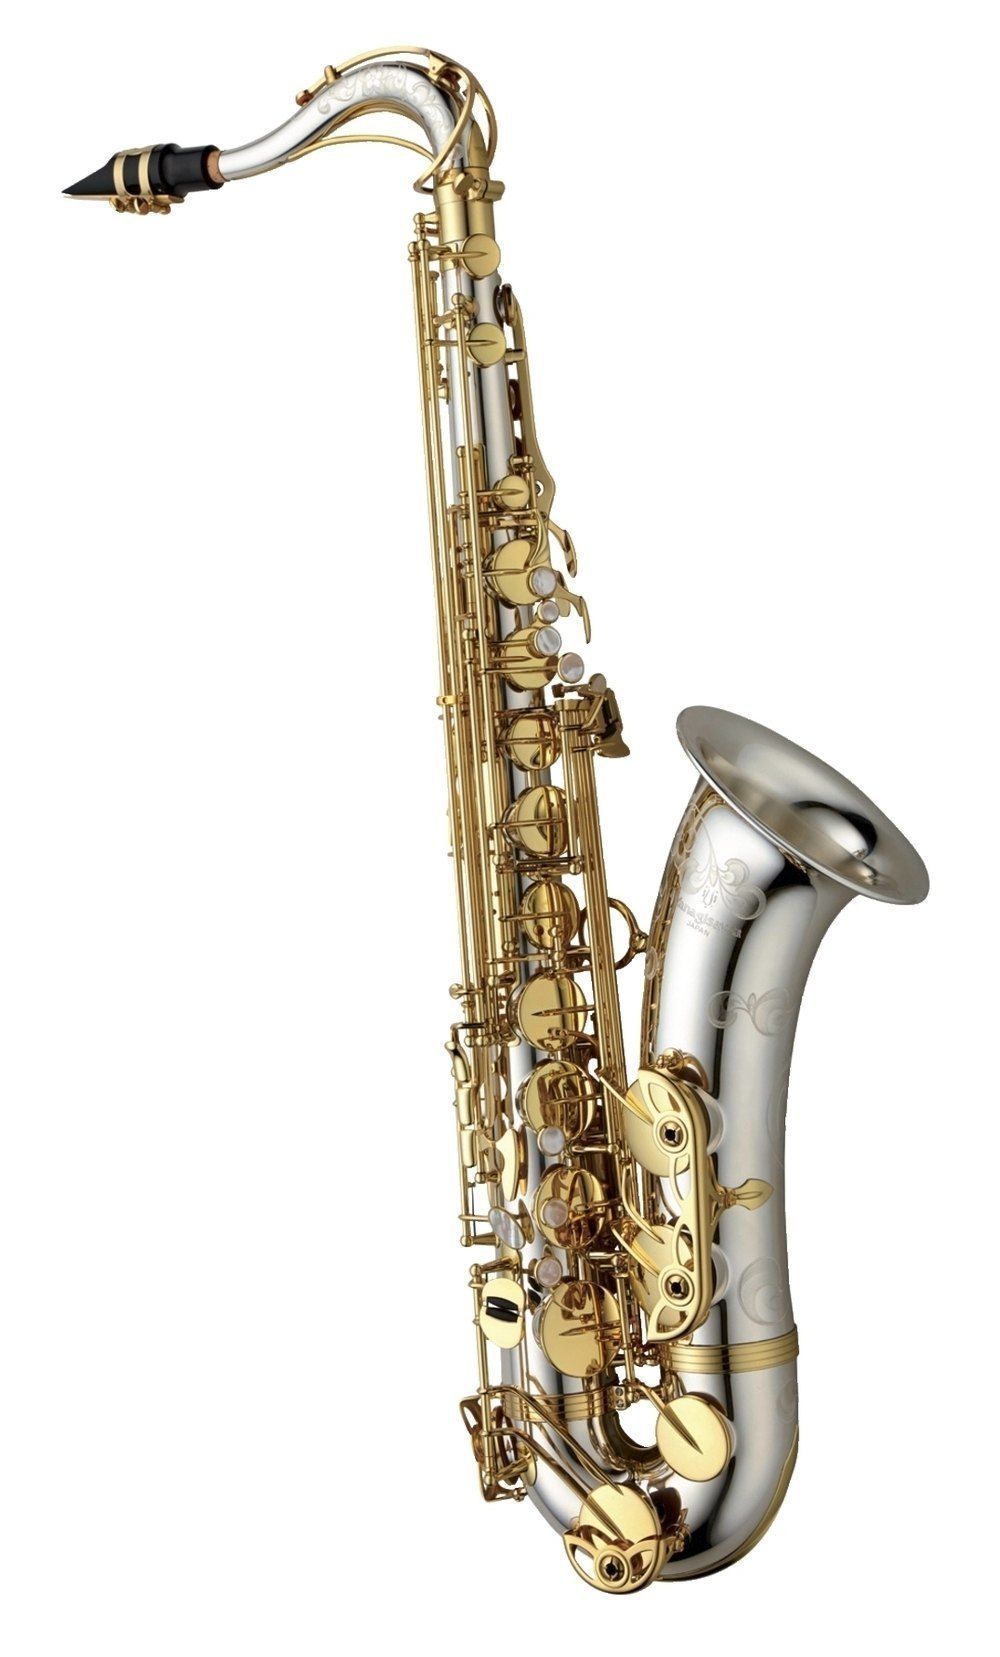 Yanagisawa Bb-Tenor Saxophone T-WO37-Elite